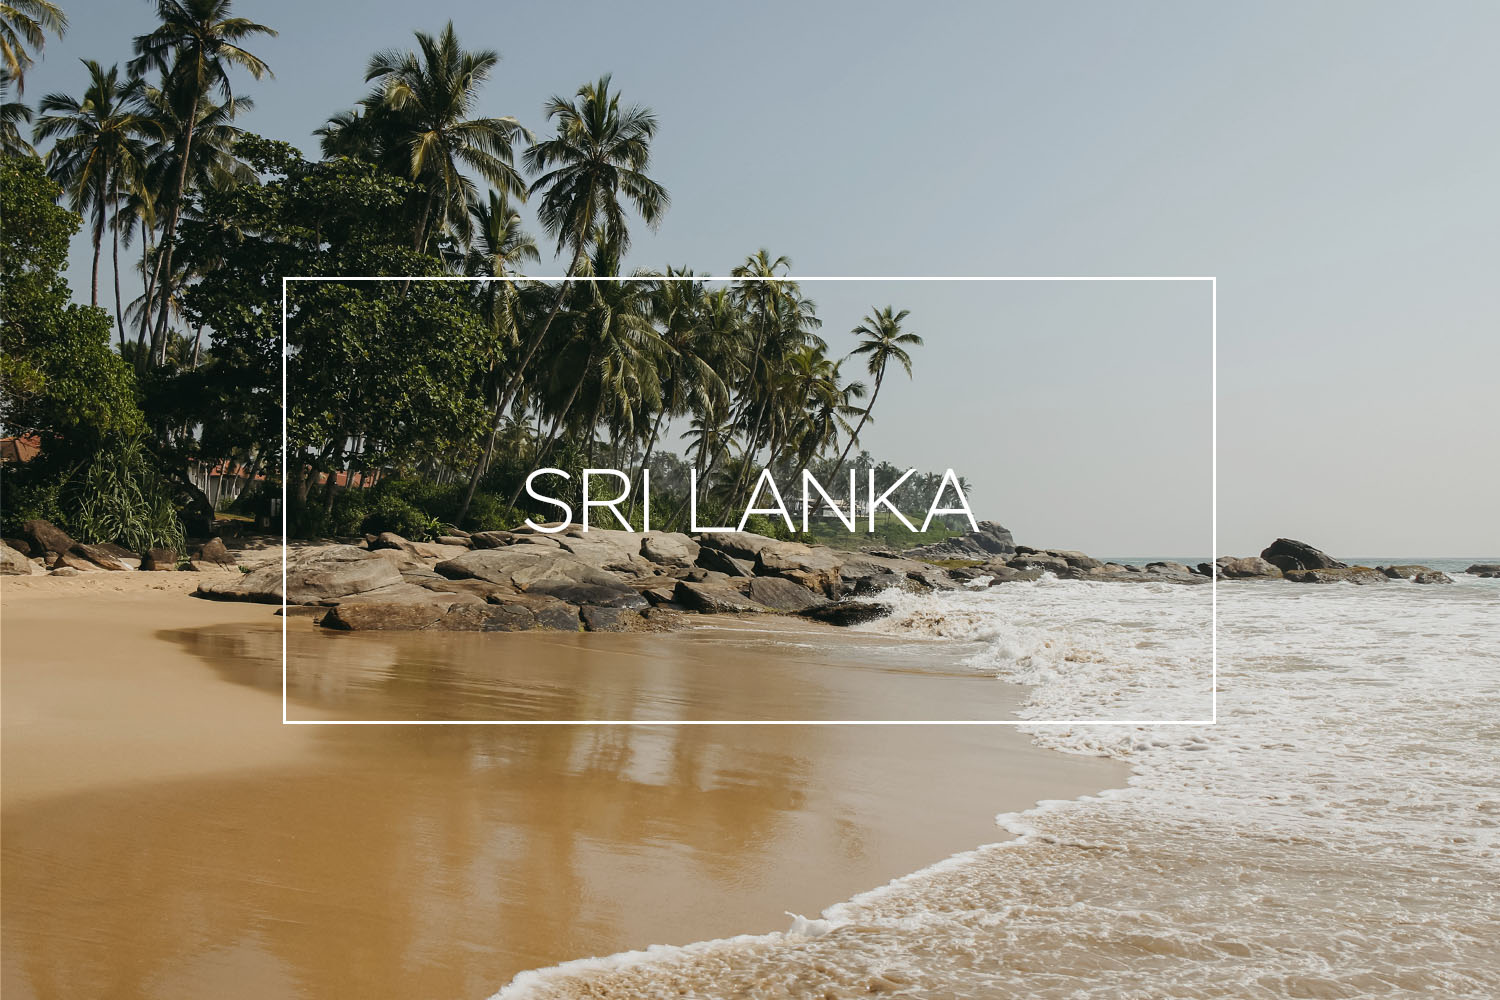 Voyage au Sri Lanka